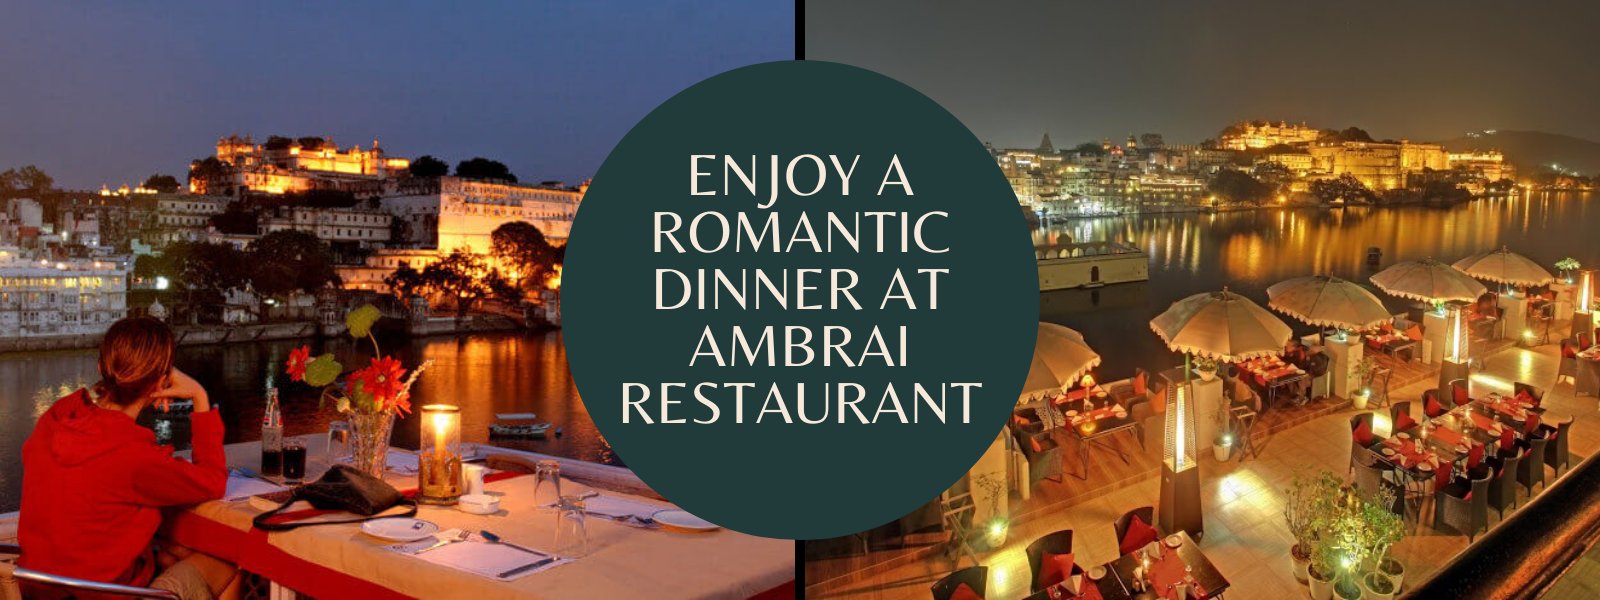 Enjoy a Romantic Dinner at Ambrai Restaurant 